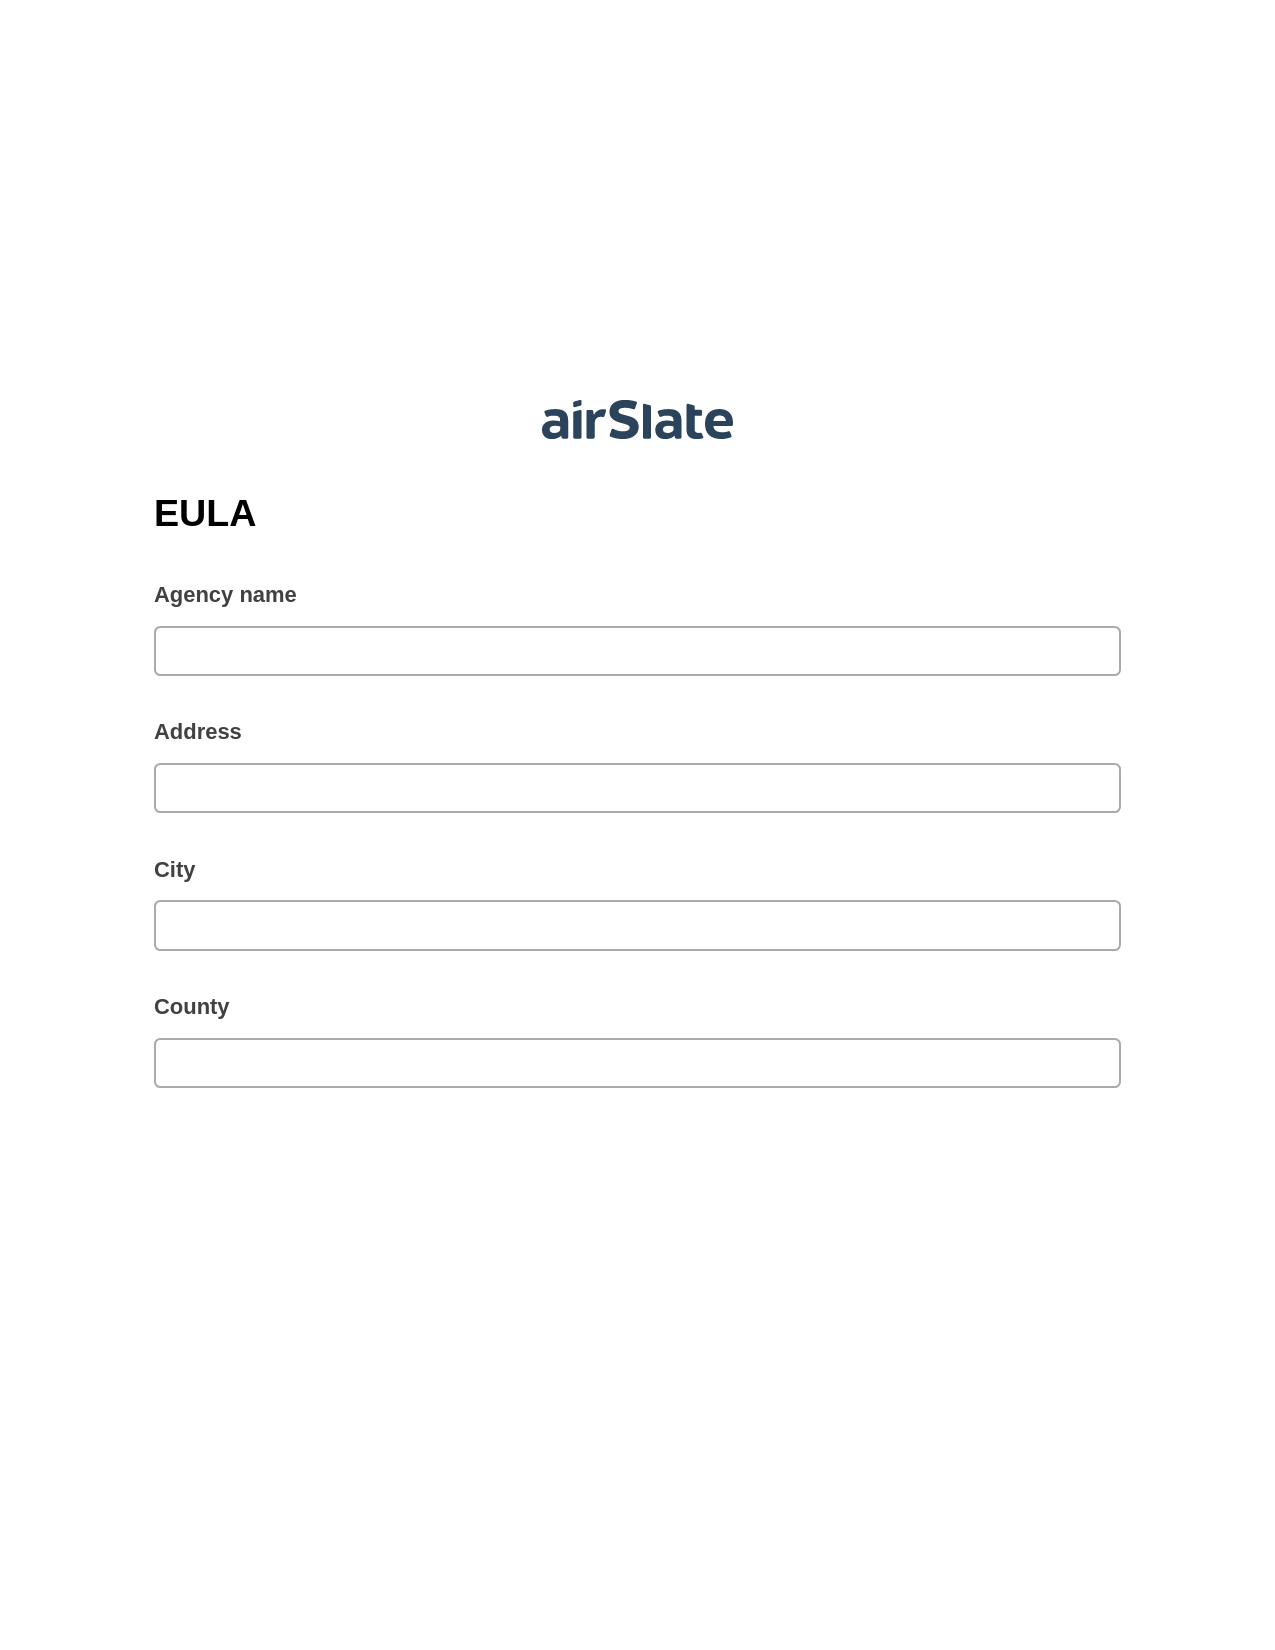 Multirole EULA Pre-fill from Google Sheet Dropdown Options Bot, SendGrid send Campaign bot, Export to Google Sheet Bot